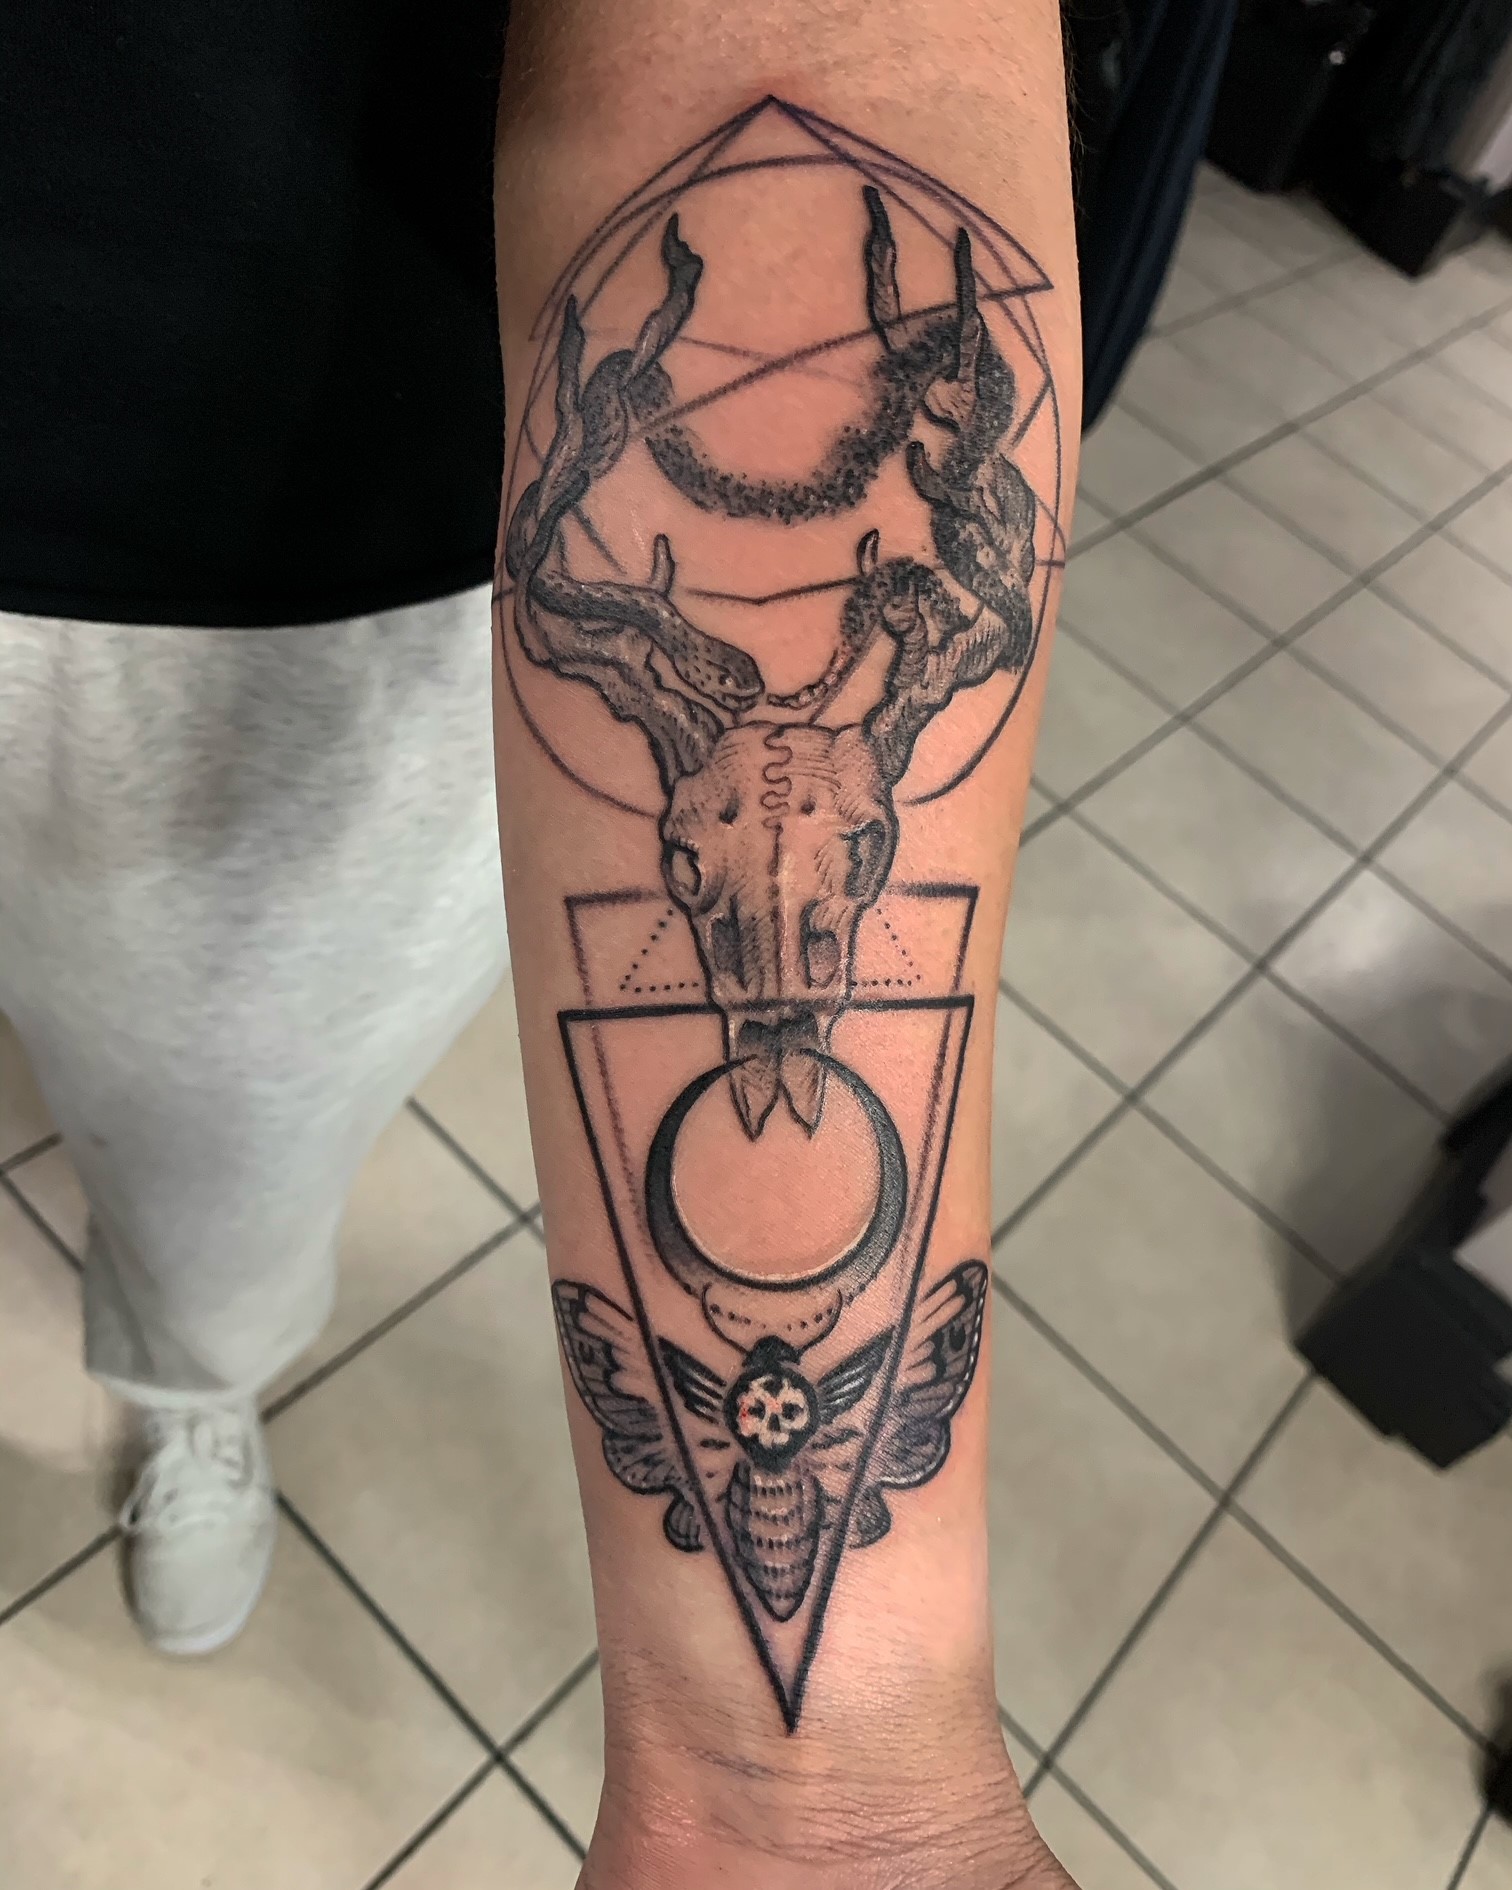 Matt-animal-skull - Bullseye Tattoo Shop